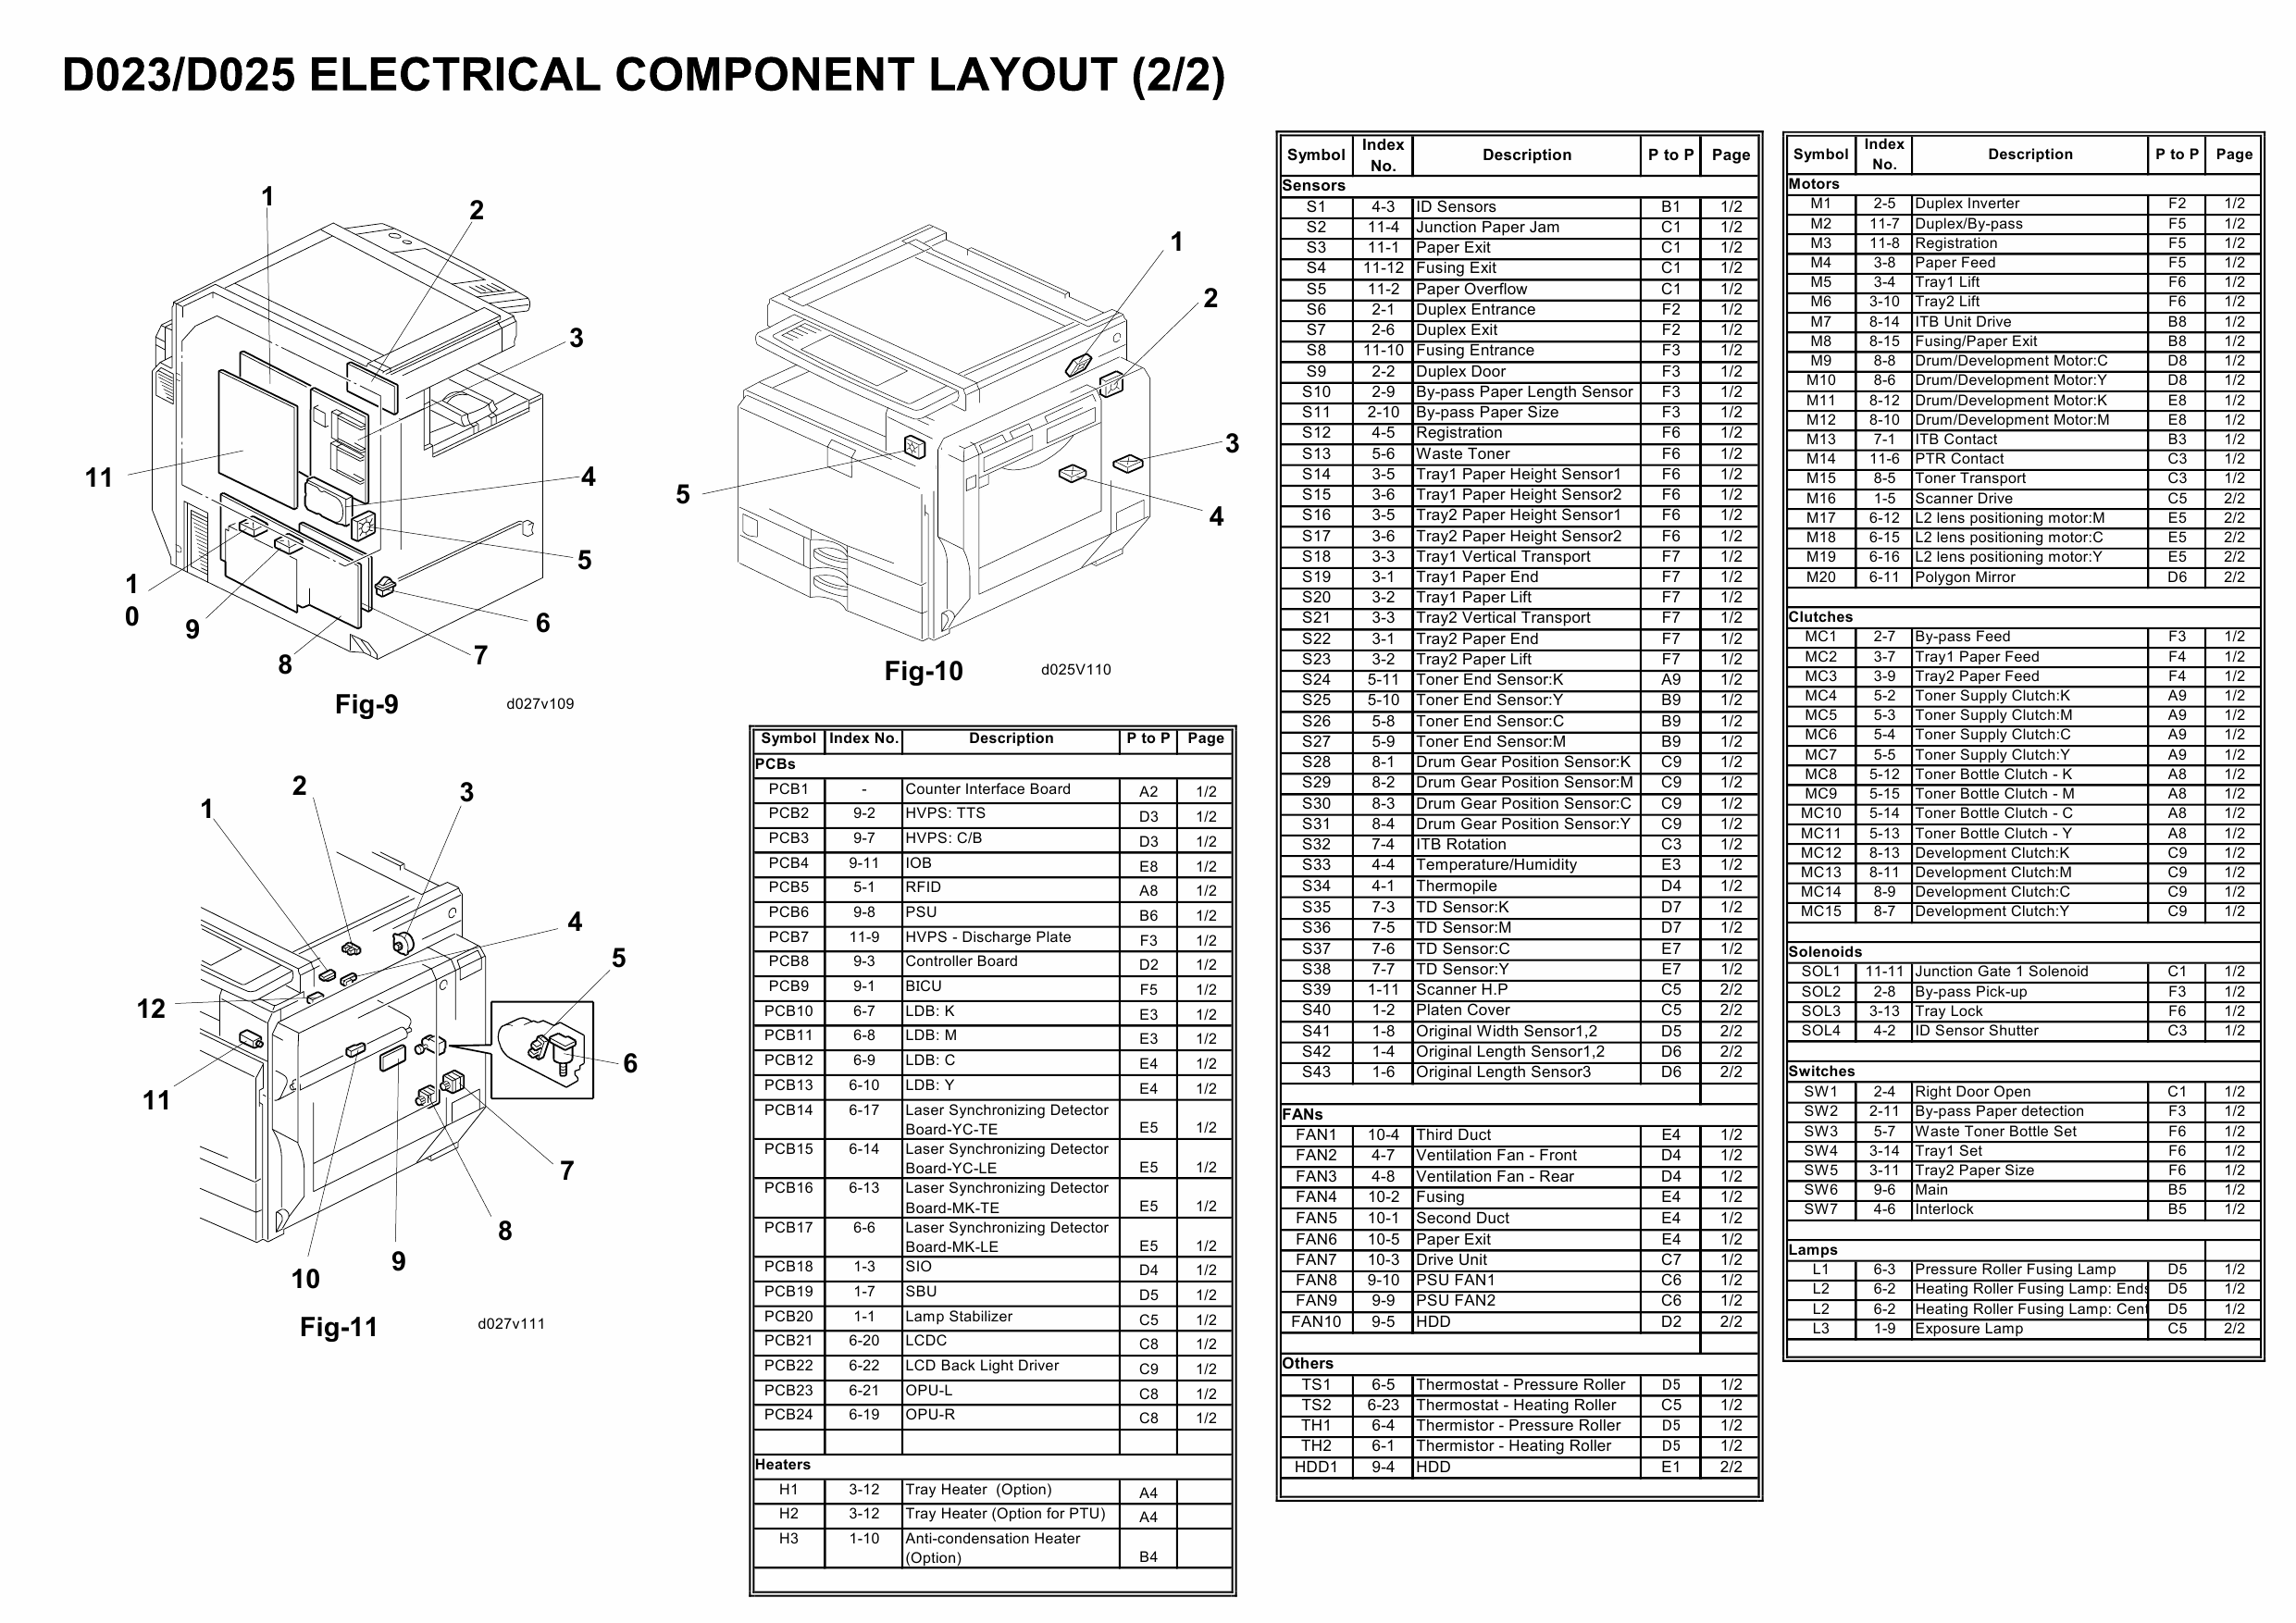 RICOH Aficio MP-C2800 C3300 D023 D025 Circuit Diagram-4